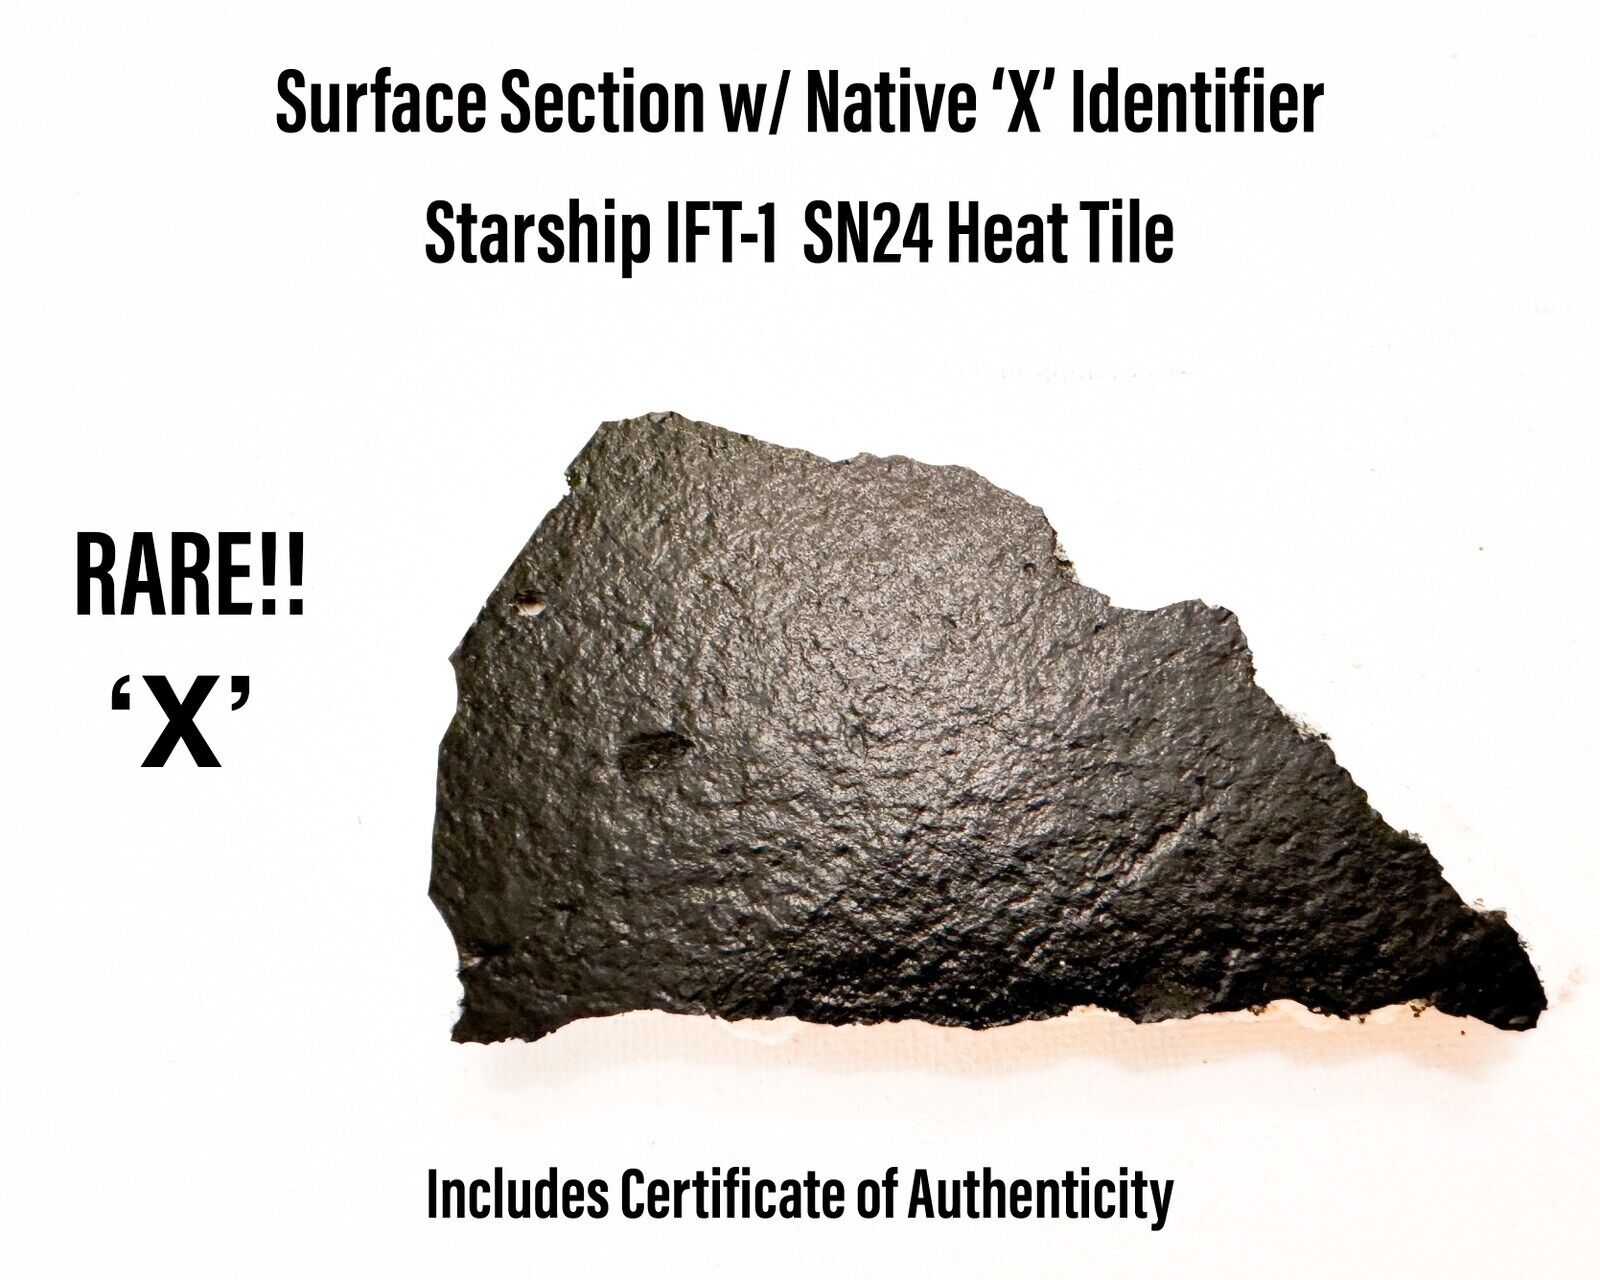 SpaceX Starship SN24 S24 Heat Shield Tile Surface Blast Section w/ X Identifier